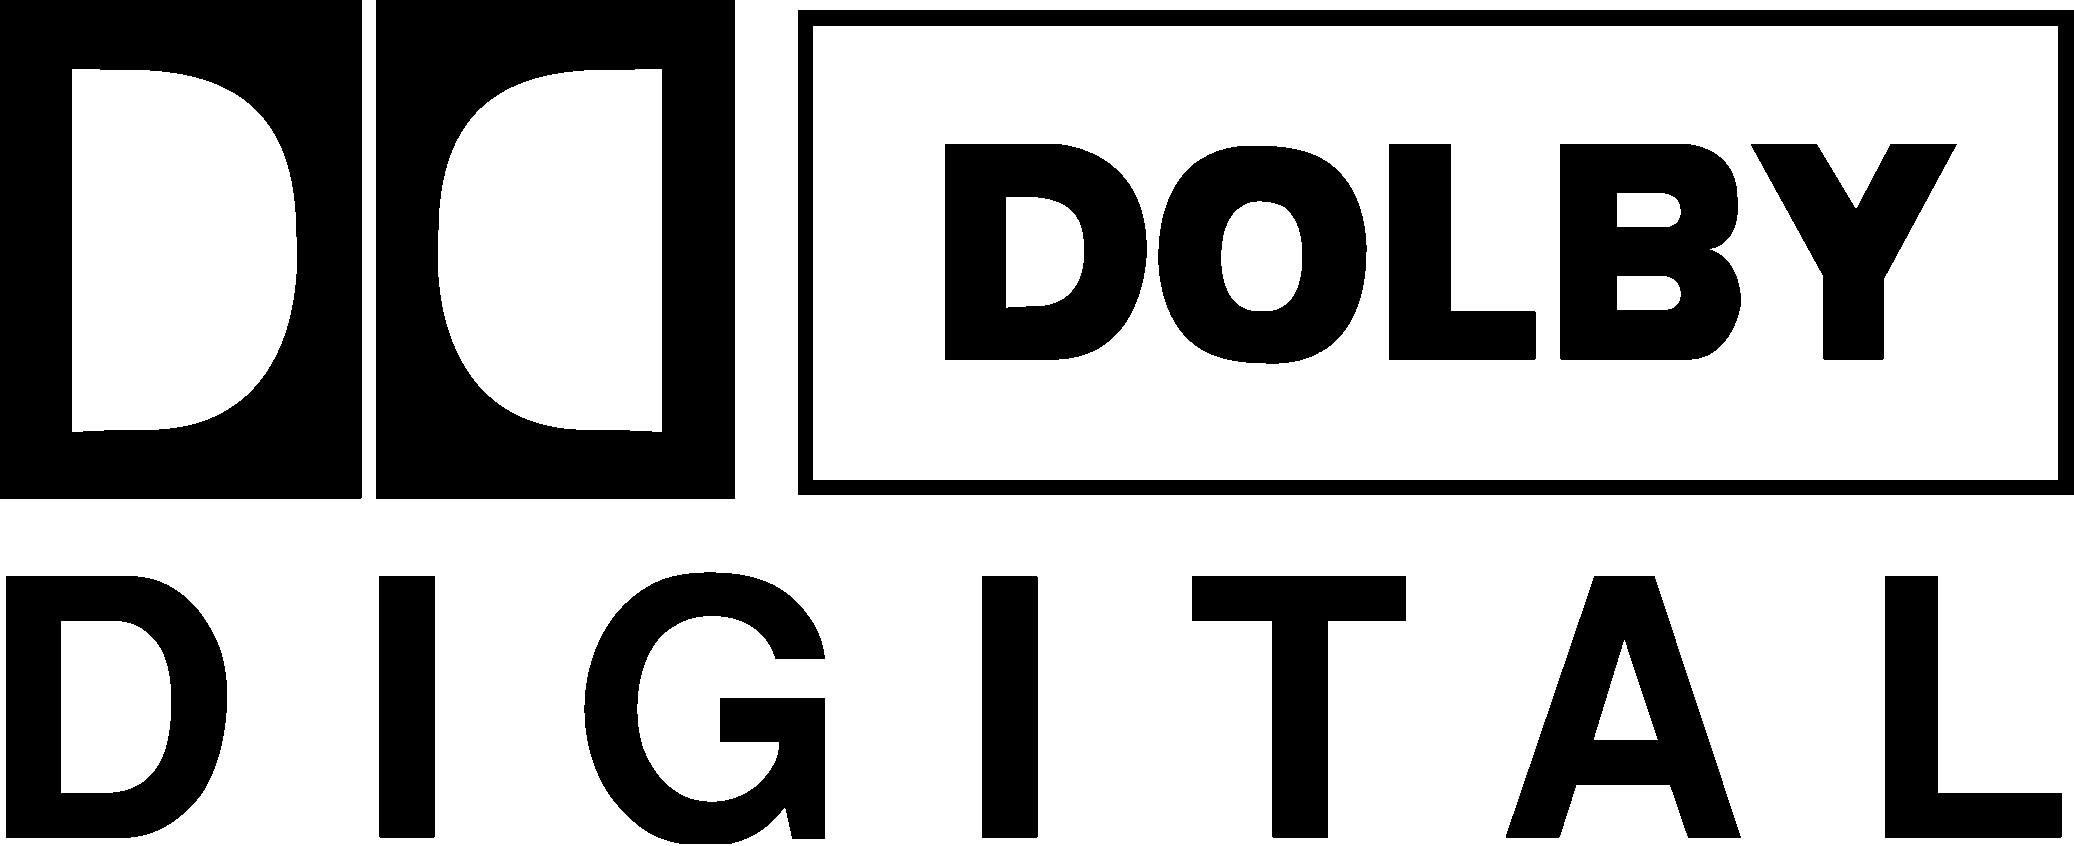 http://www.cd-siefert.de/html/download/logos/Dolby%20digital/Dolby%20Digital.png